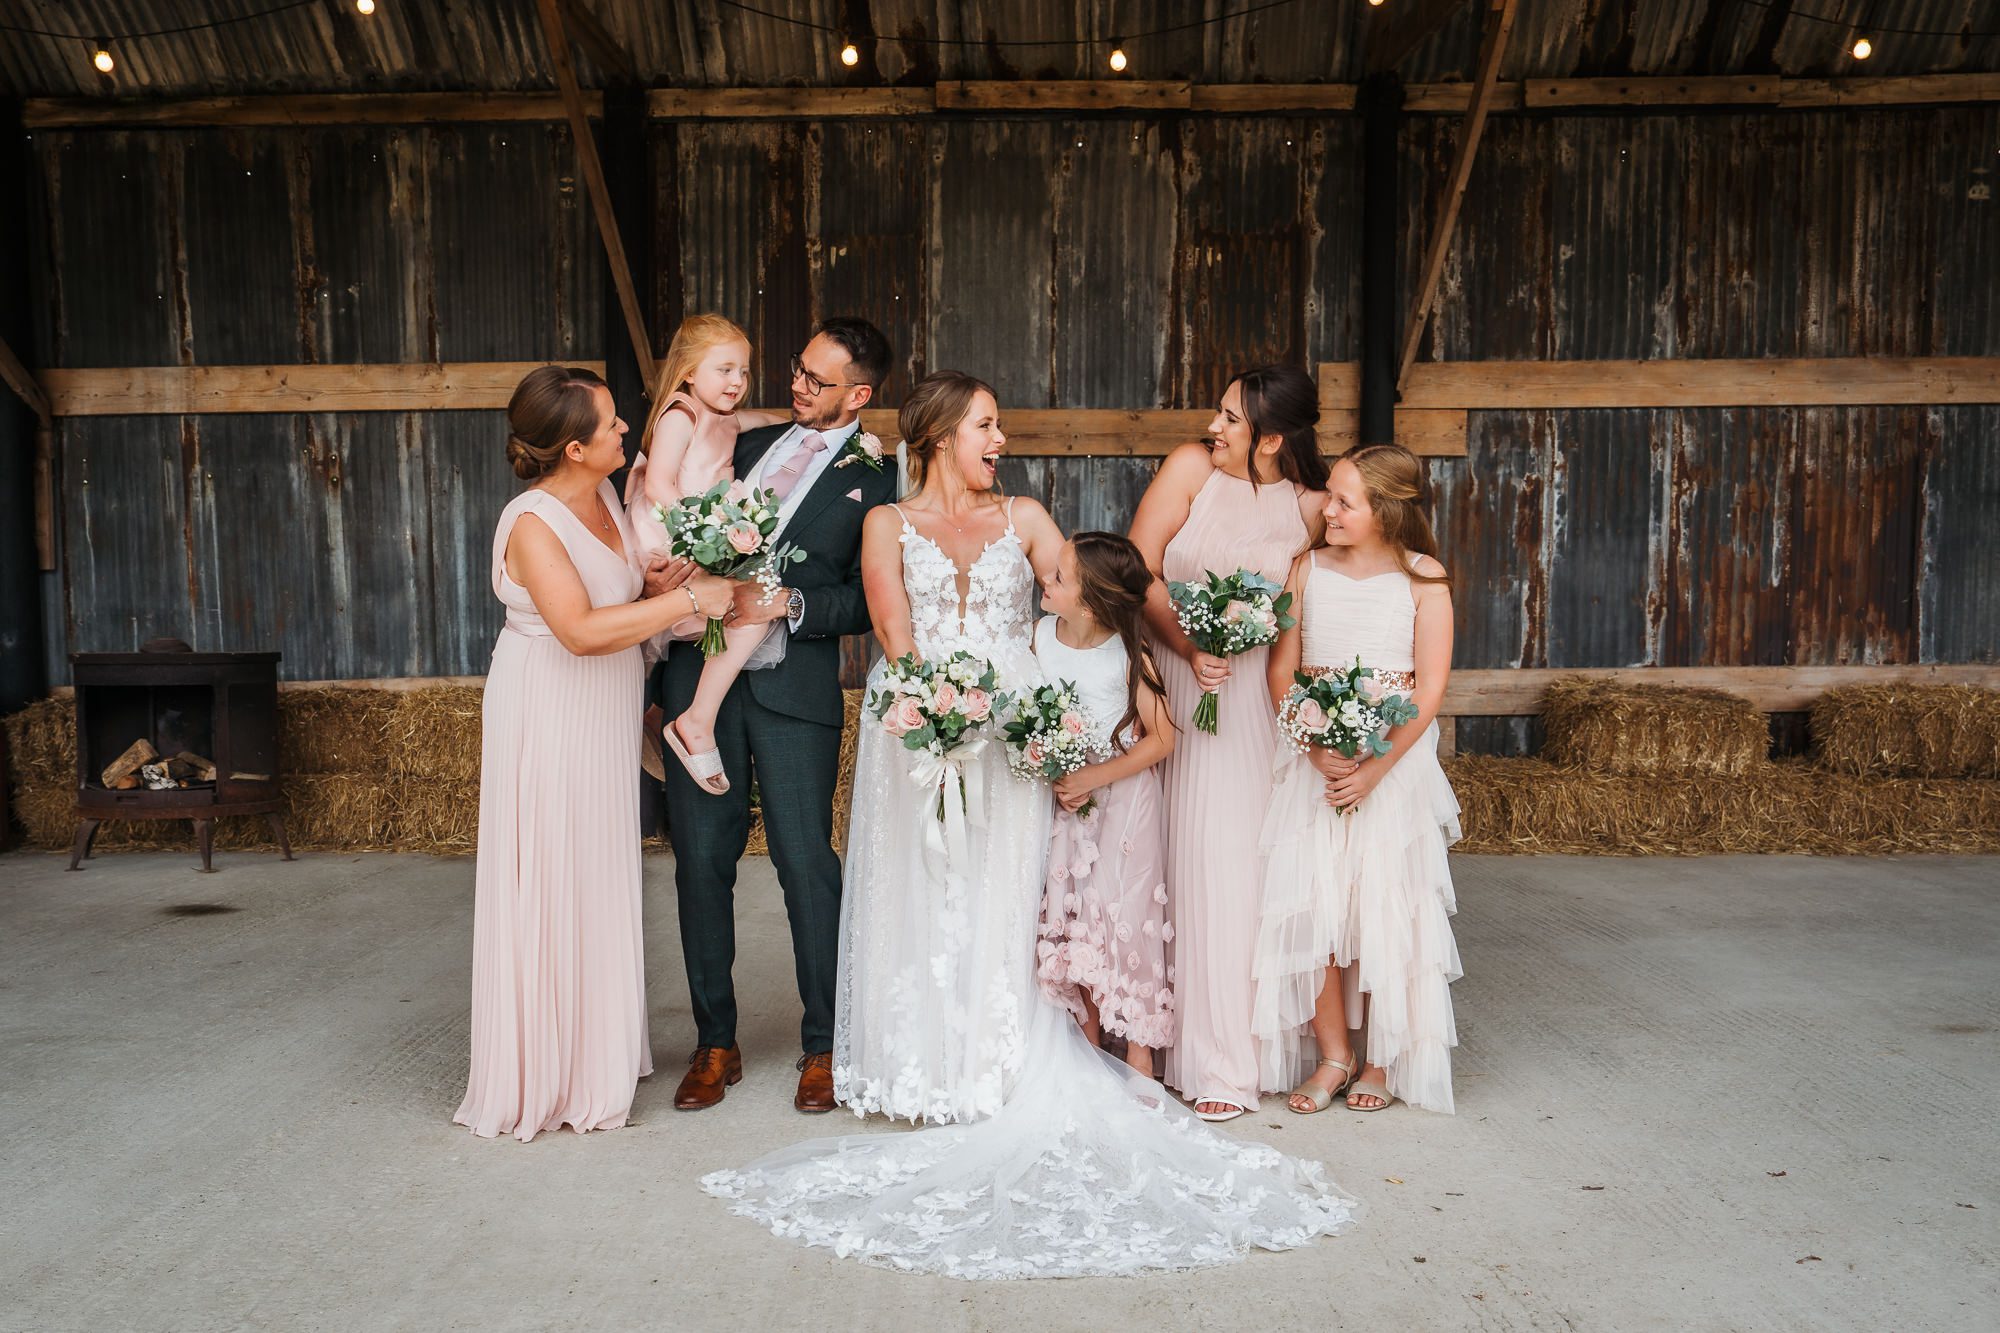 Silchester Farm wedding photographer review.